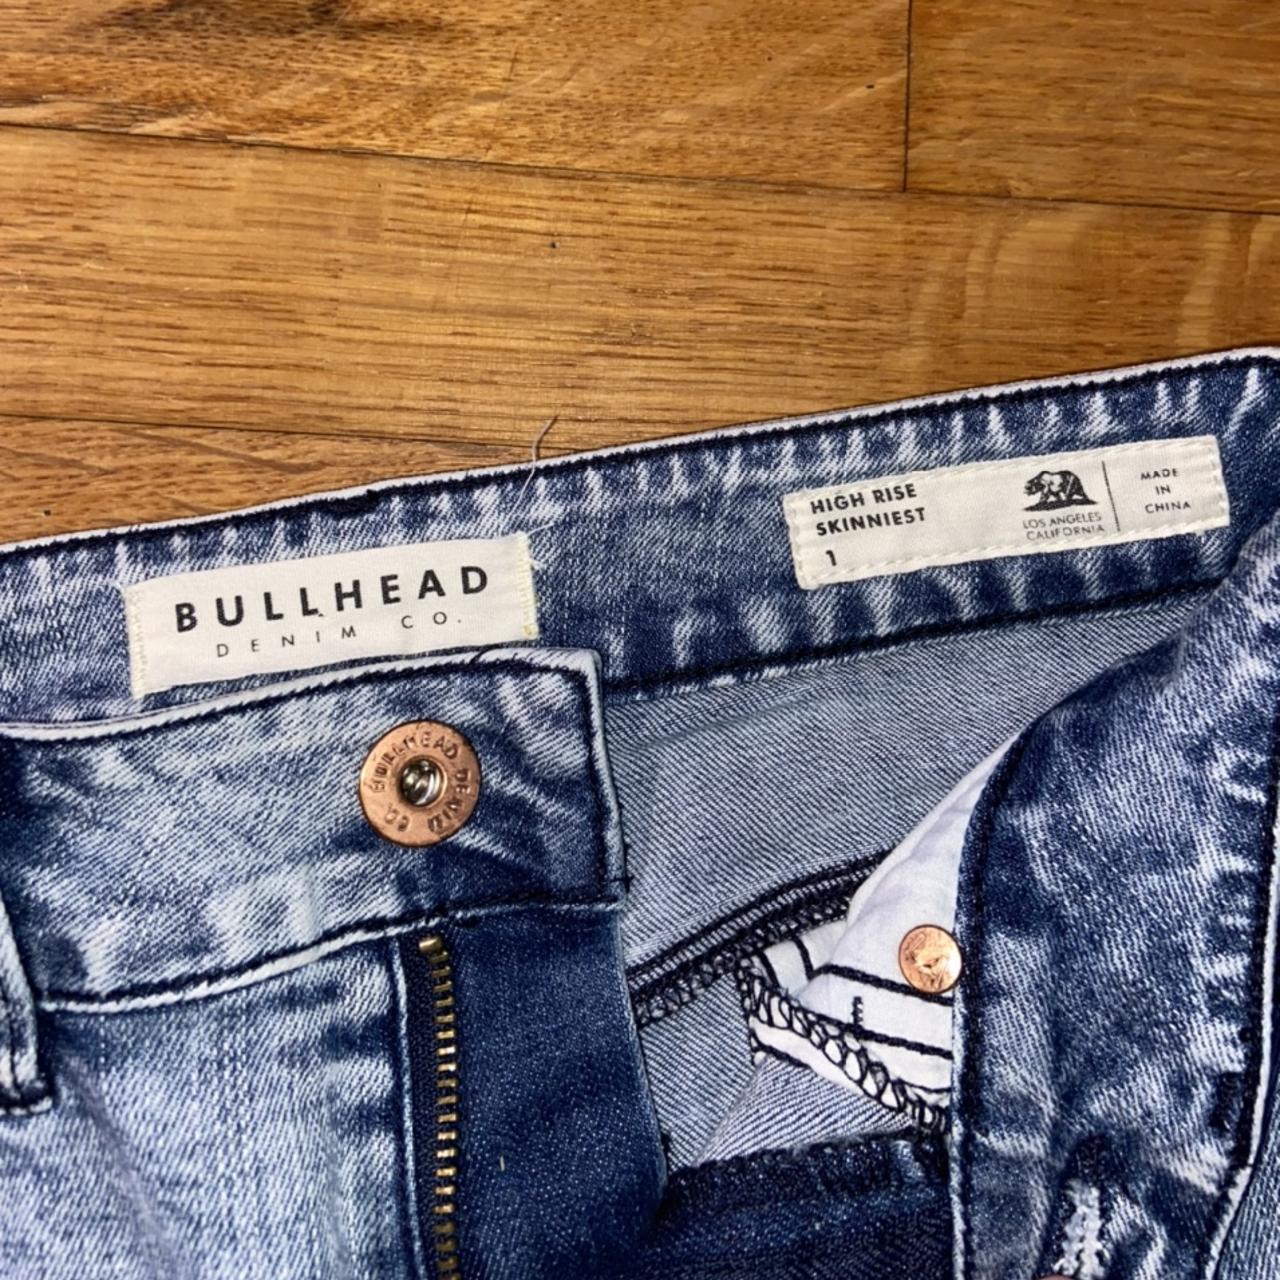 Bullhead  Jeans  Mens Bullhead Denim Co Slim Straight Jeans 3x30   Poshmark